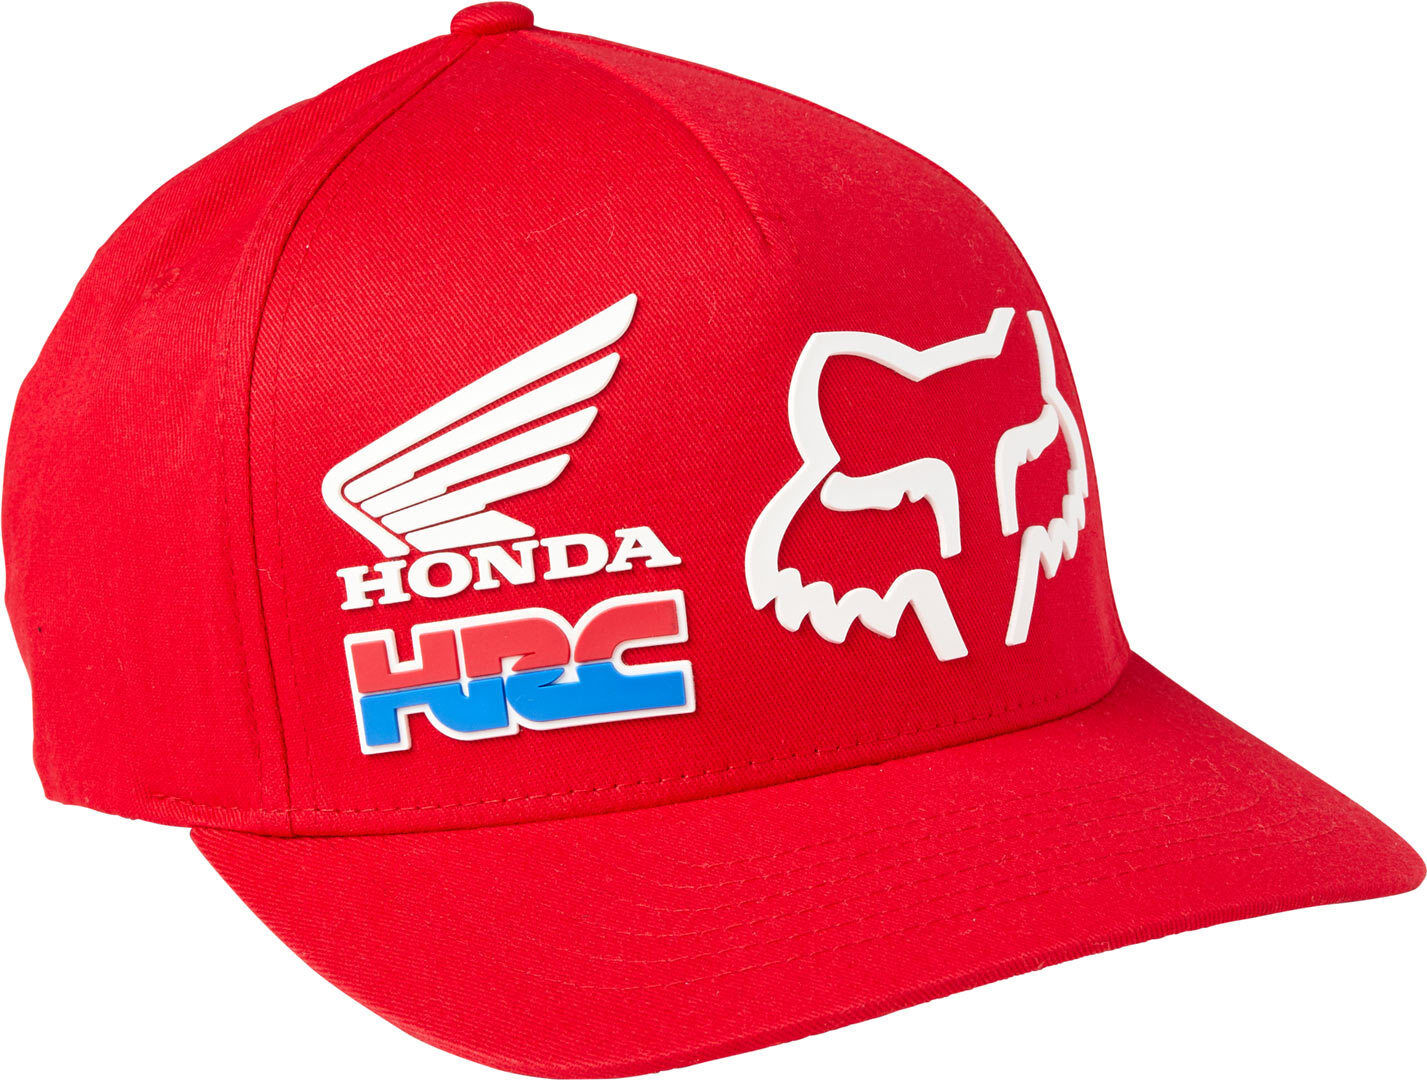 FOX Honda Hrc Flexfit Čepice S M červená